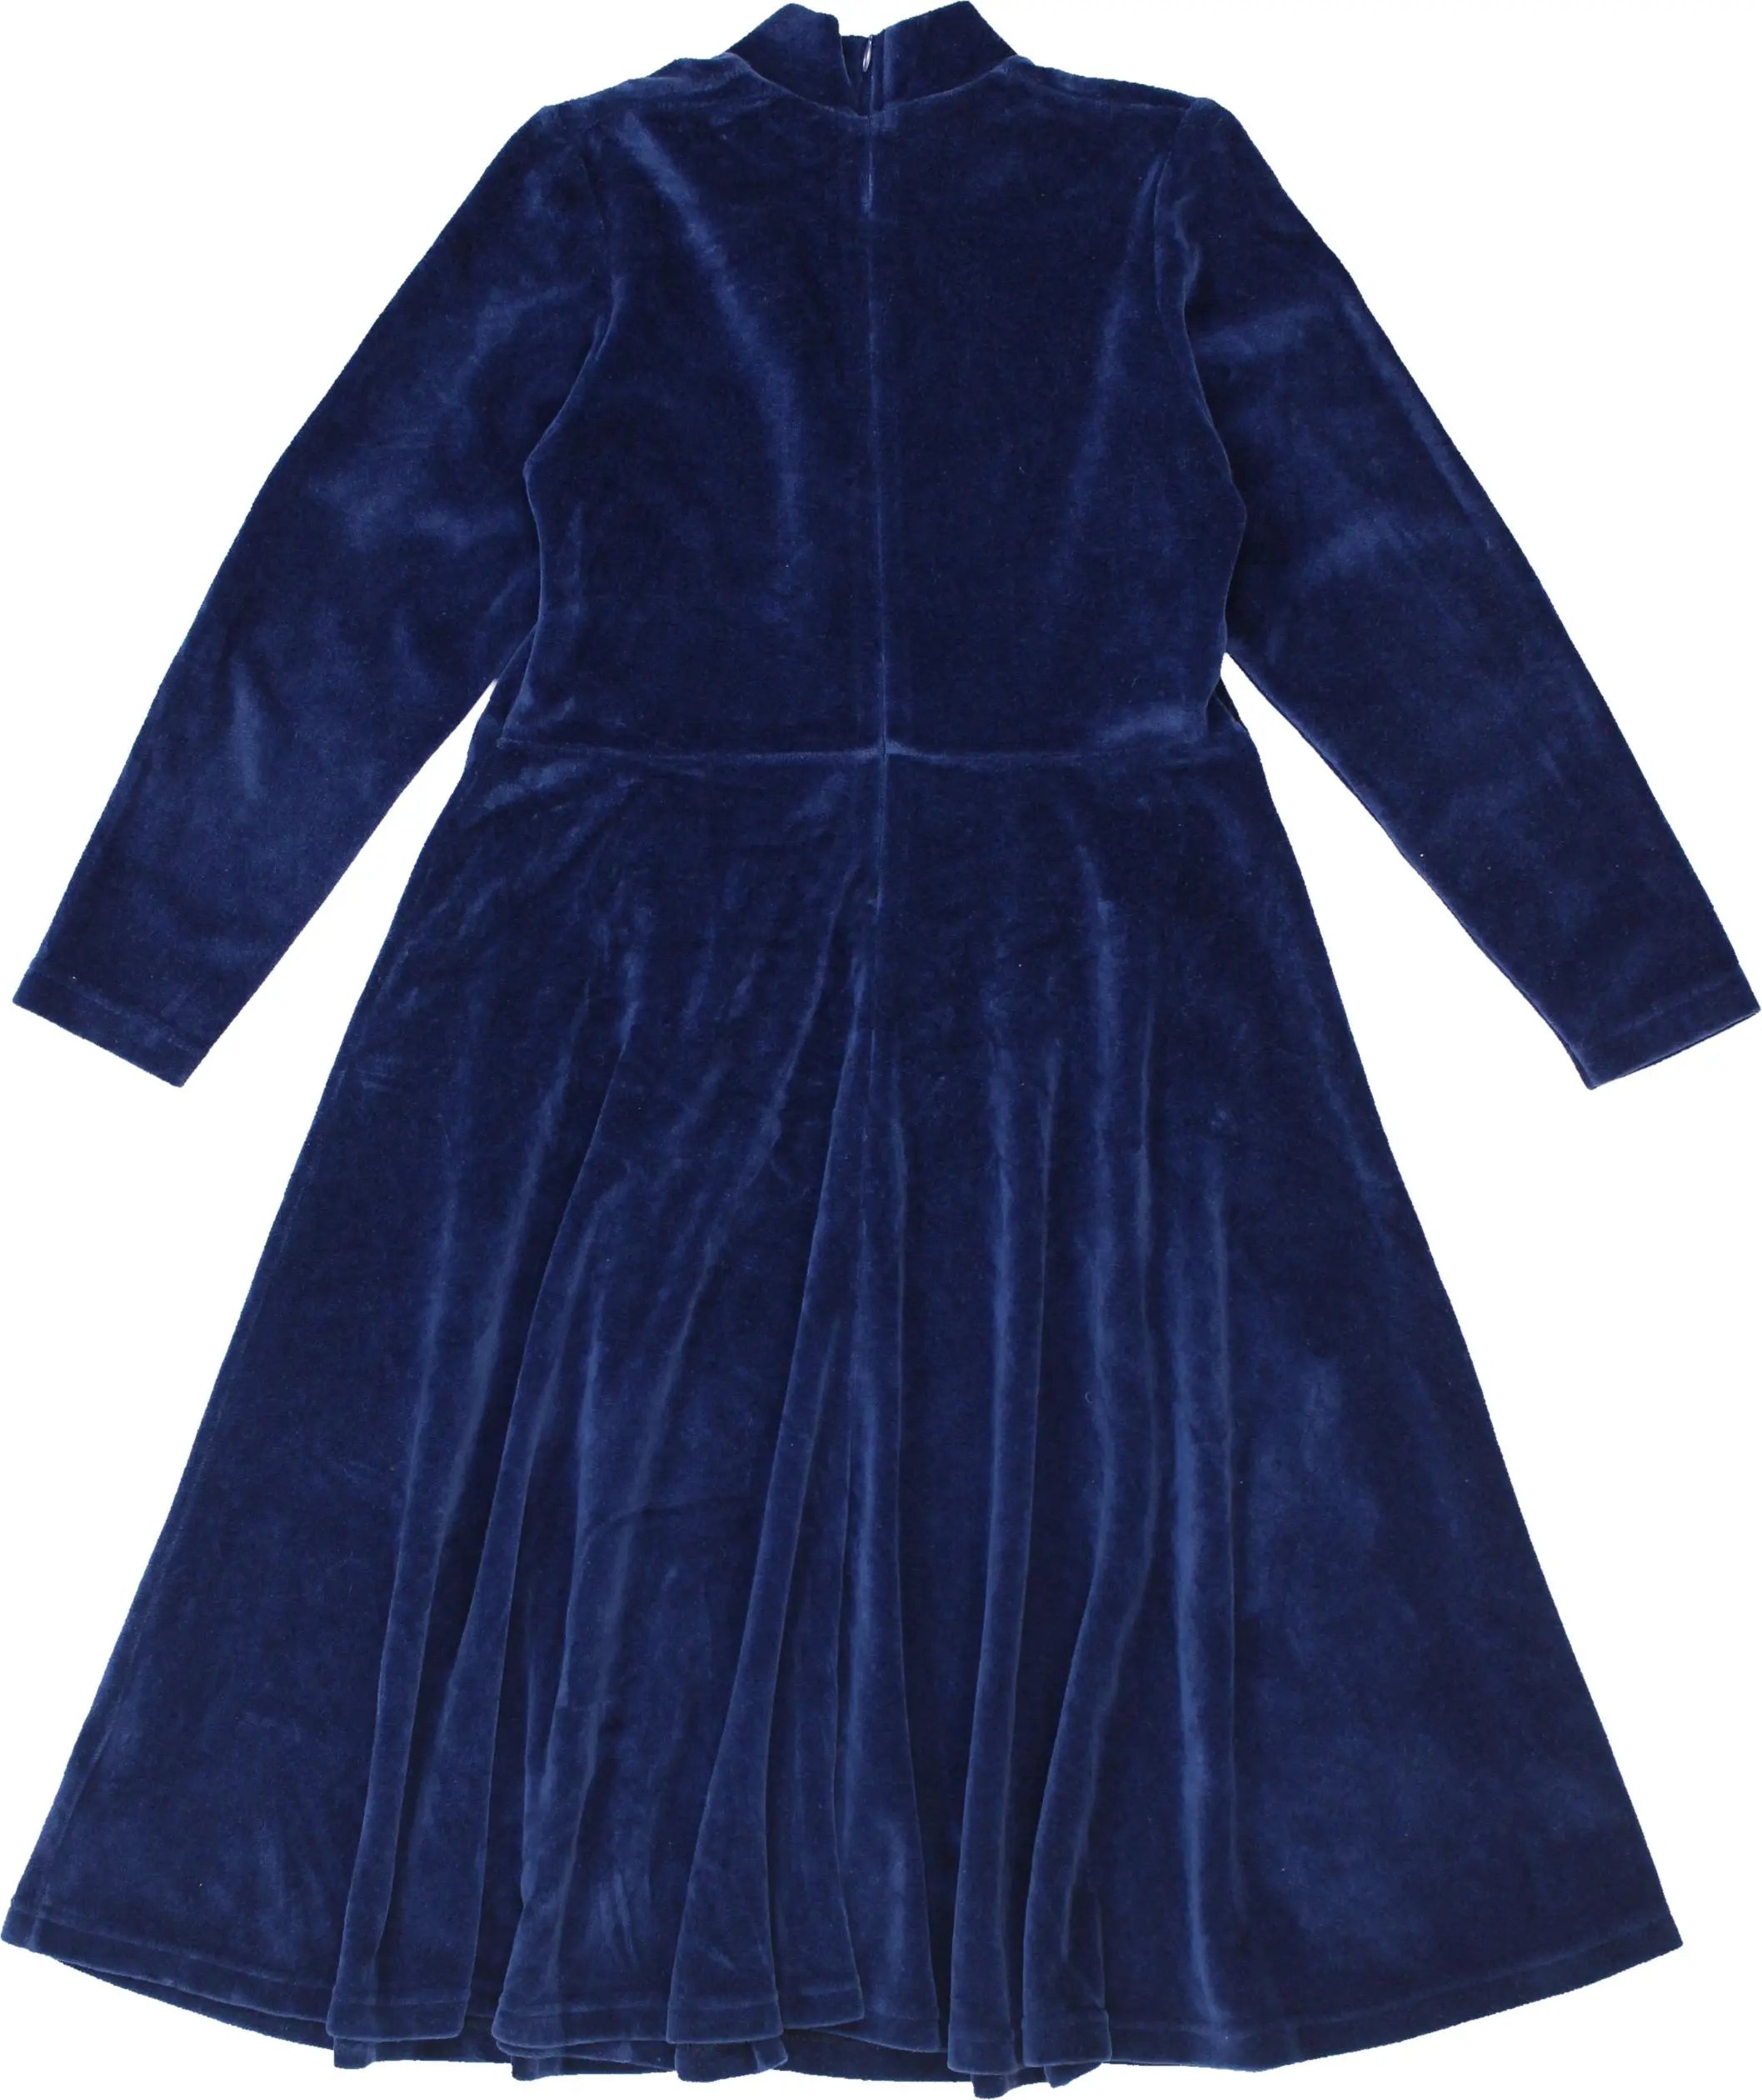 Batti Cure - Blue Velvet Dress- ThriftTale.com - Vintage and second handclothing